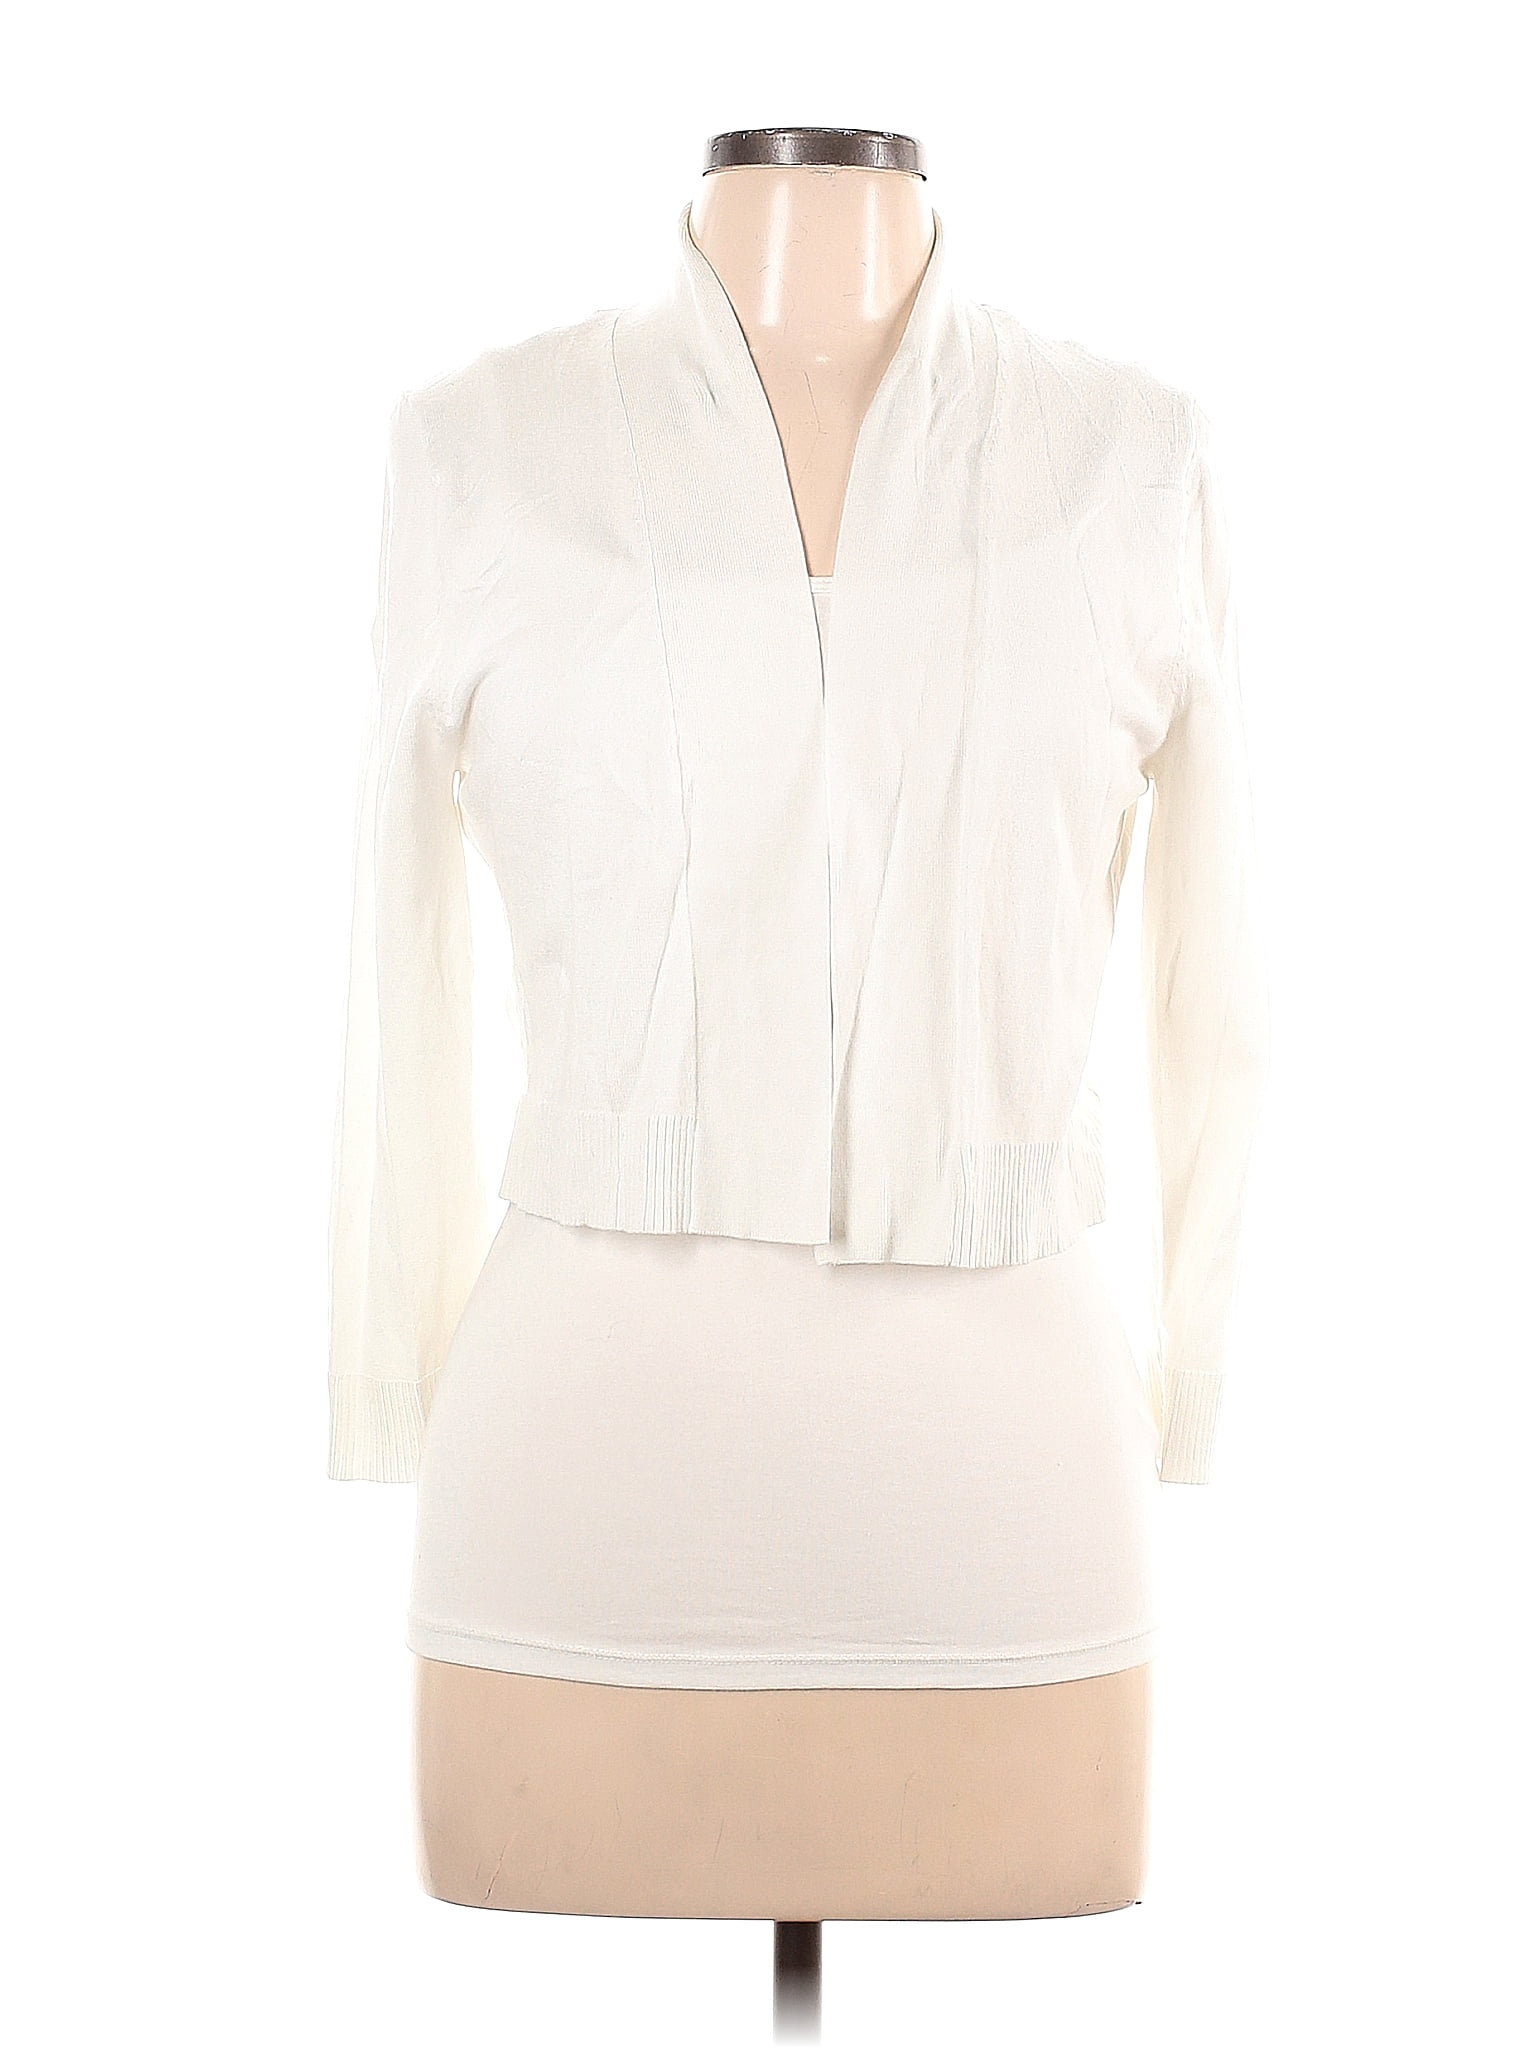 Calvin Klein Color Block Solid White Cardigan Size L - 70% off | thredUP